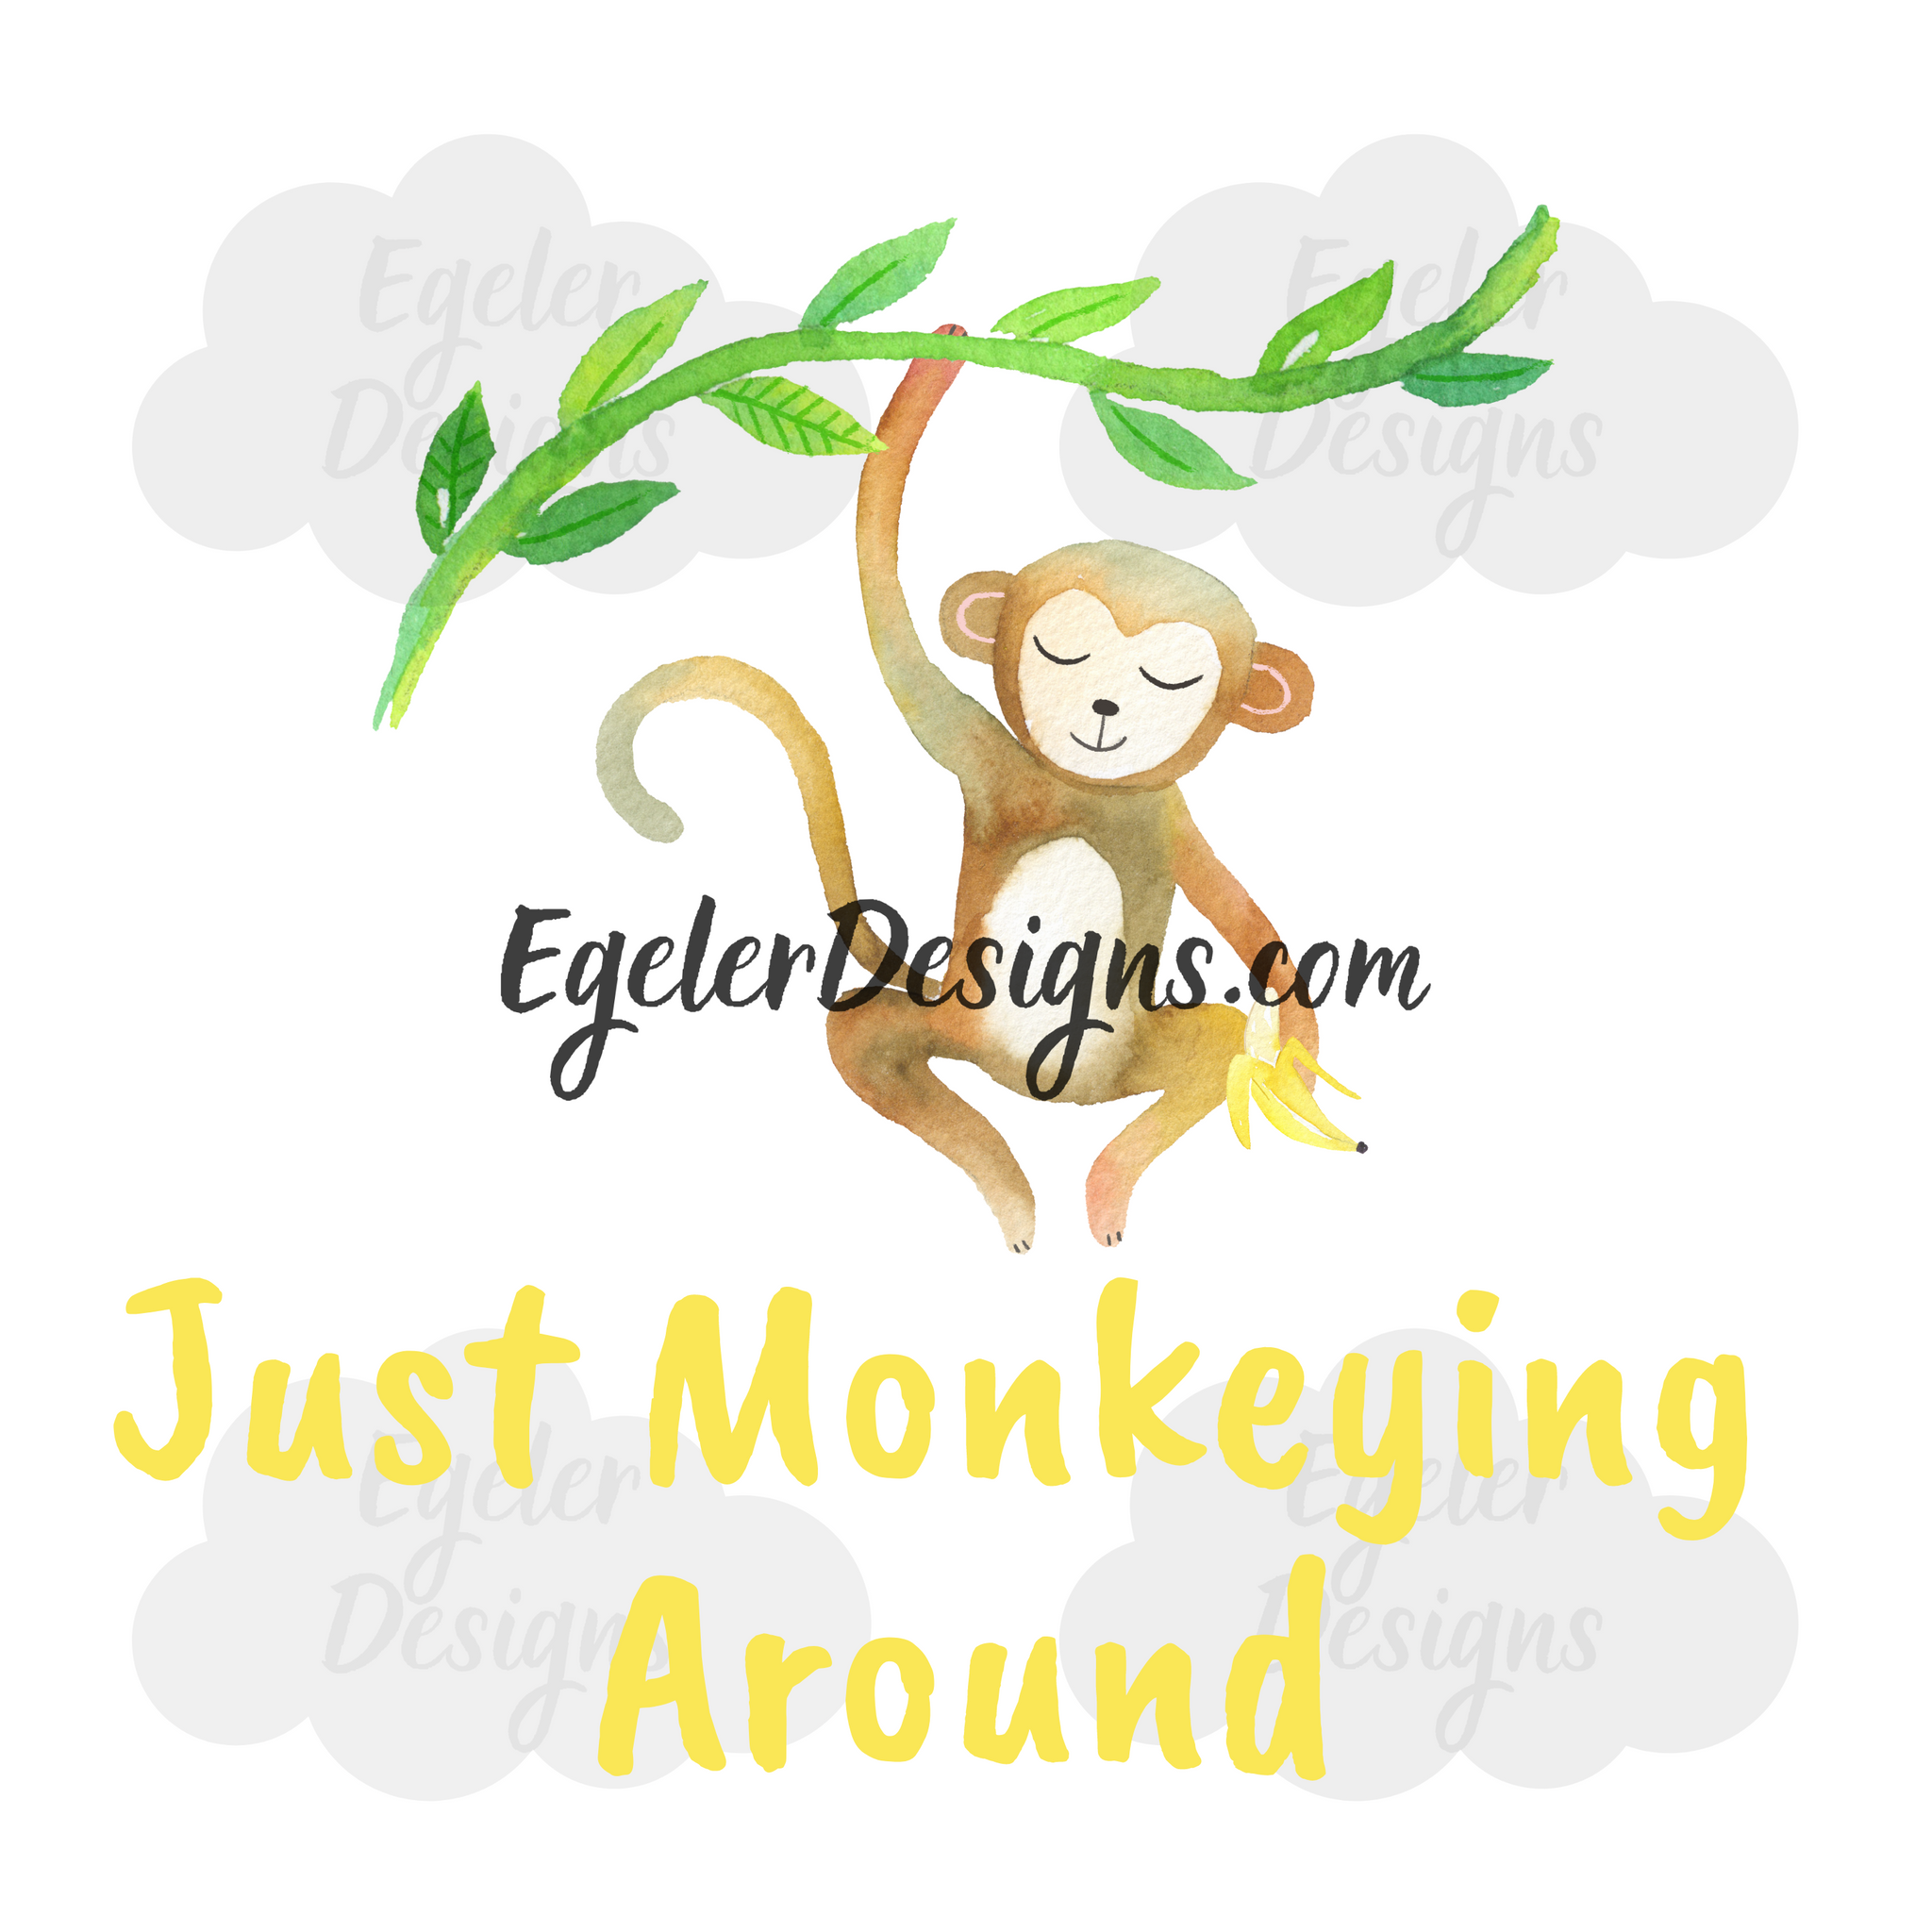 Monkeying Around PNG